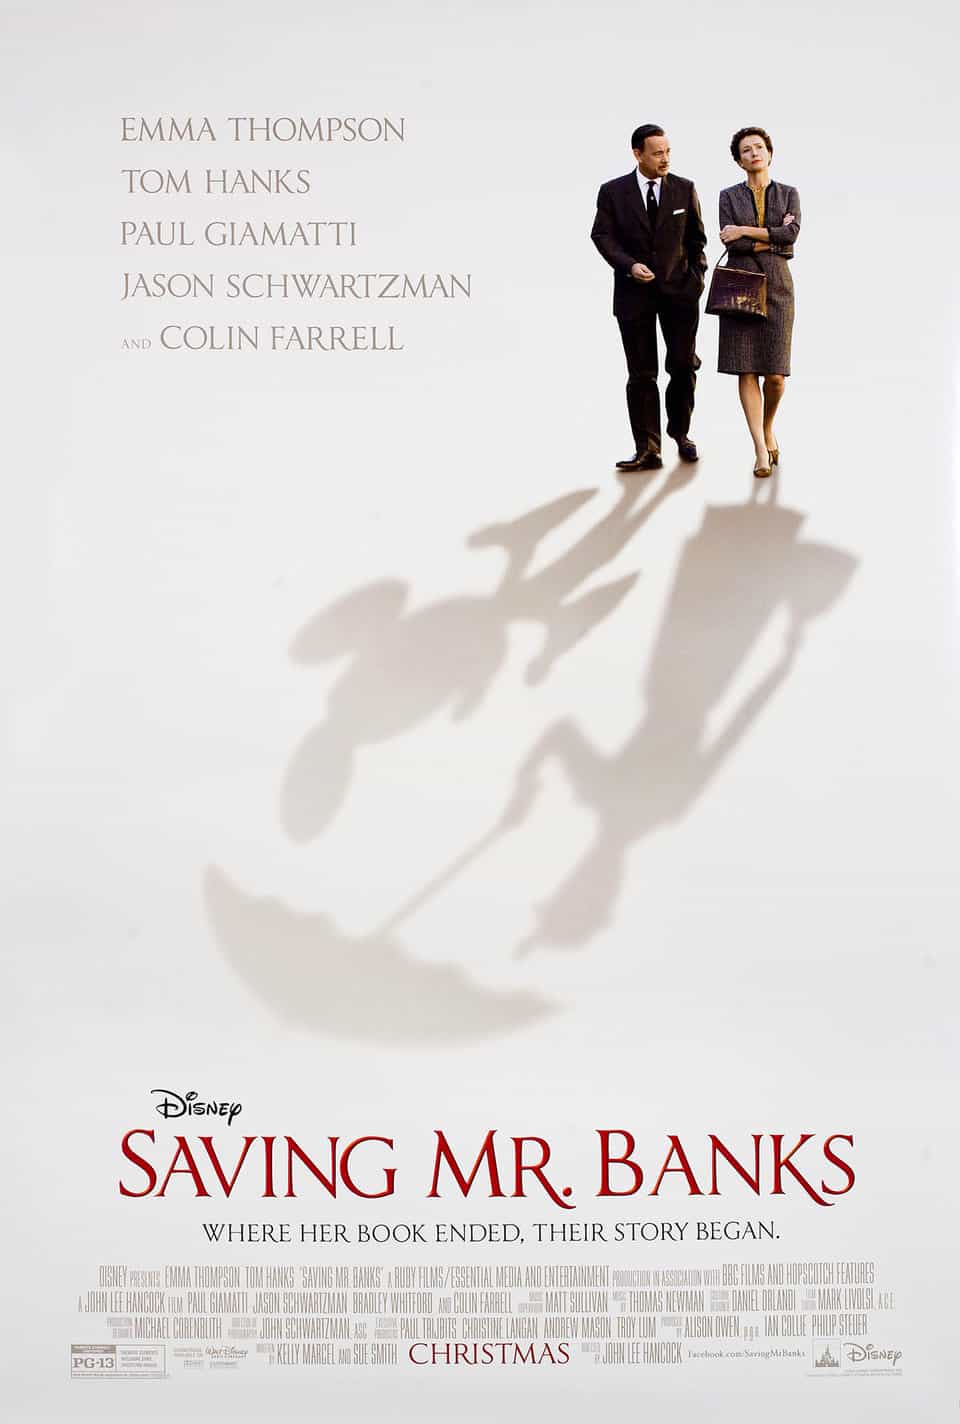 Saving Mr. Banks (John Lee Hancock, 2013)